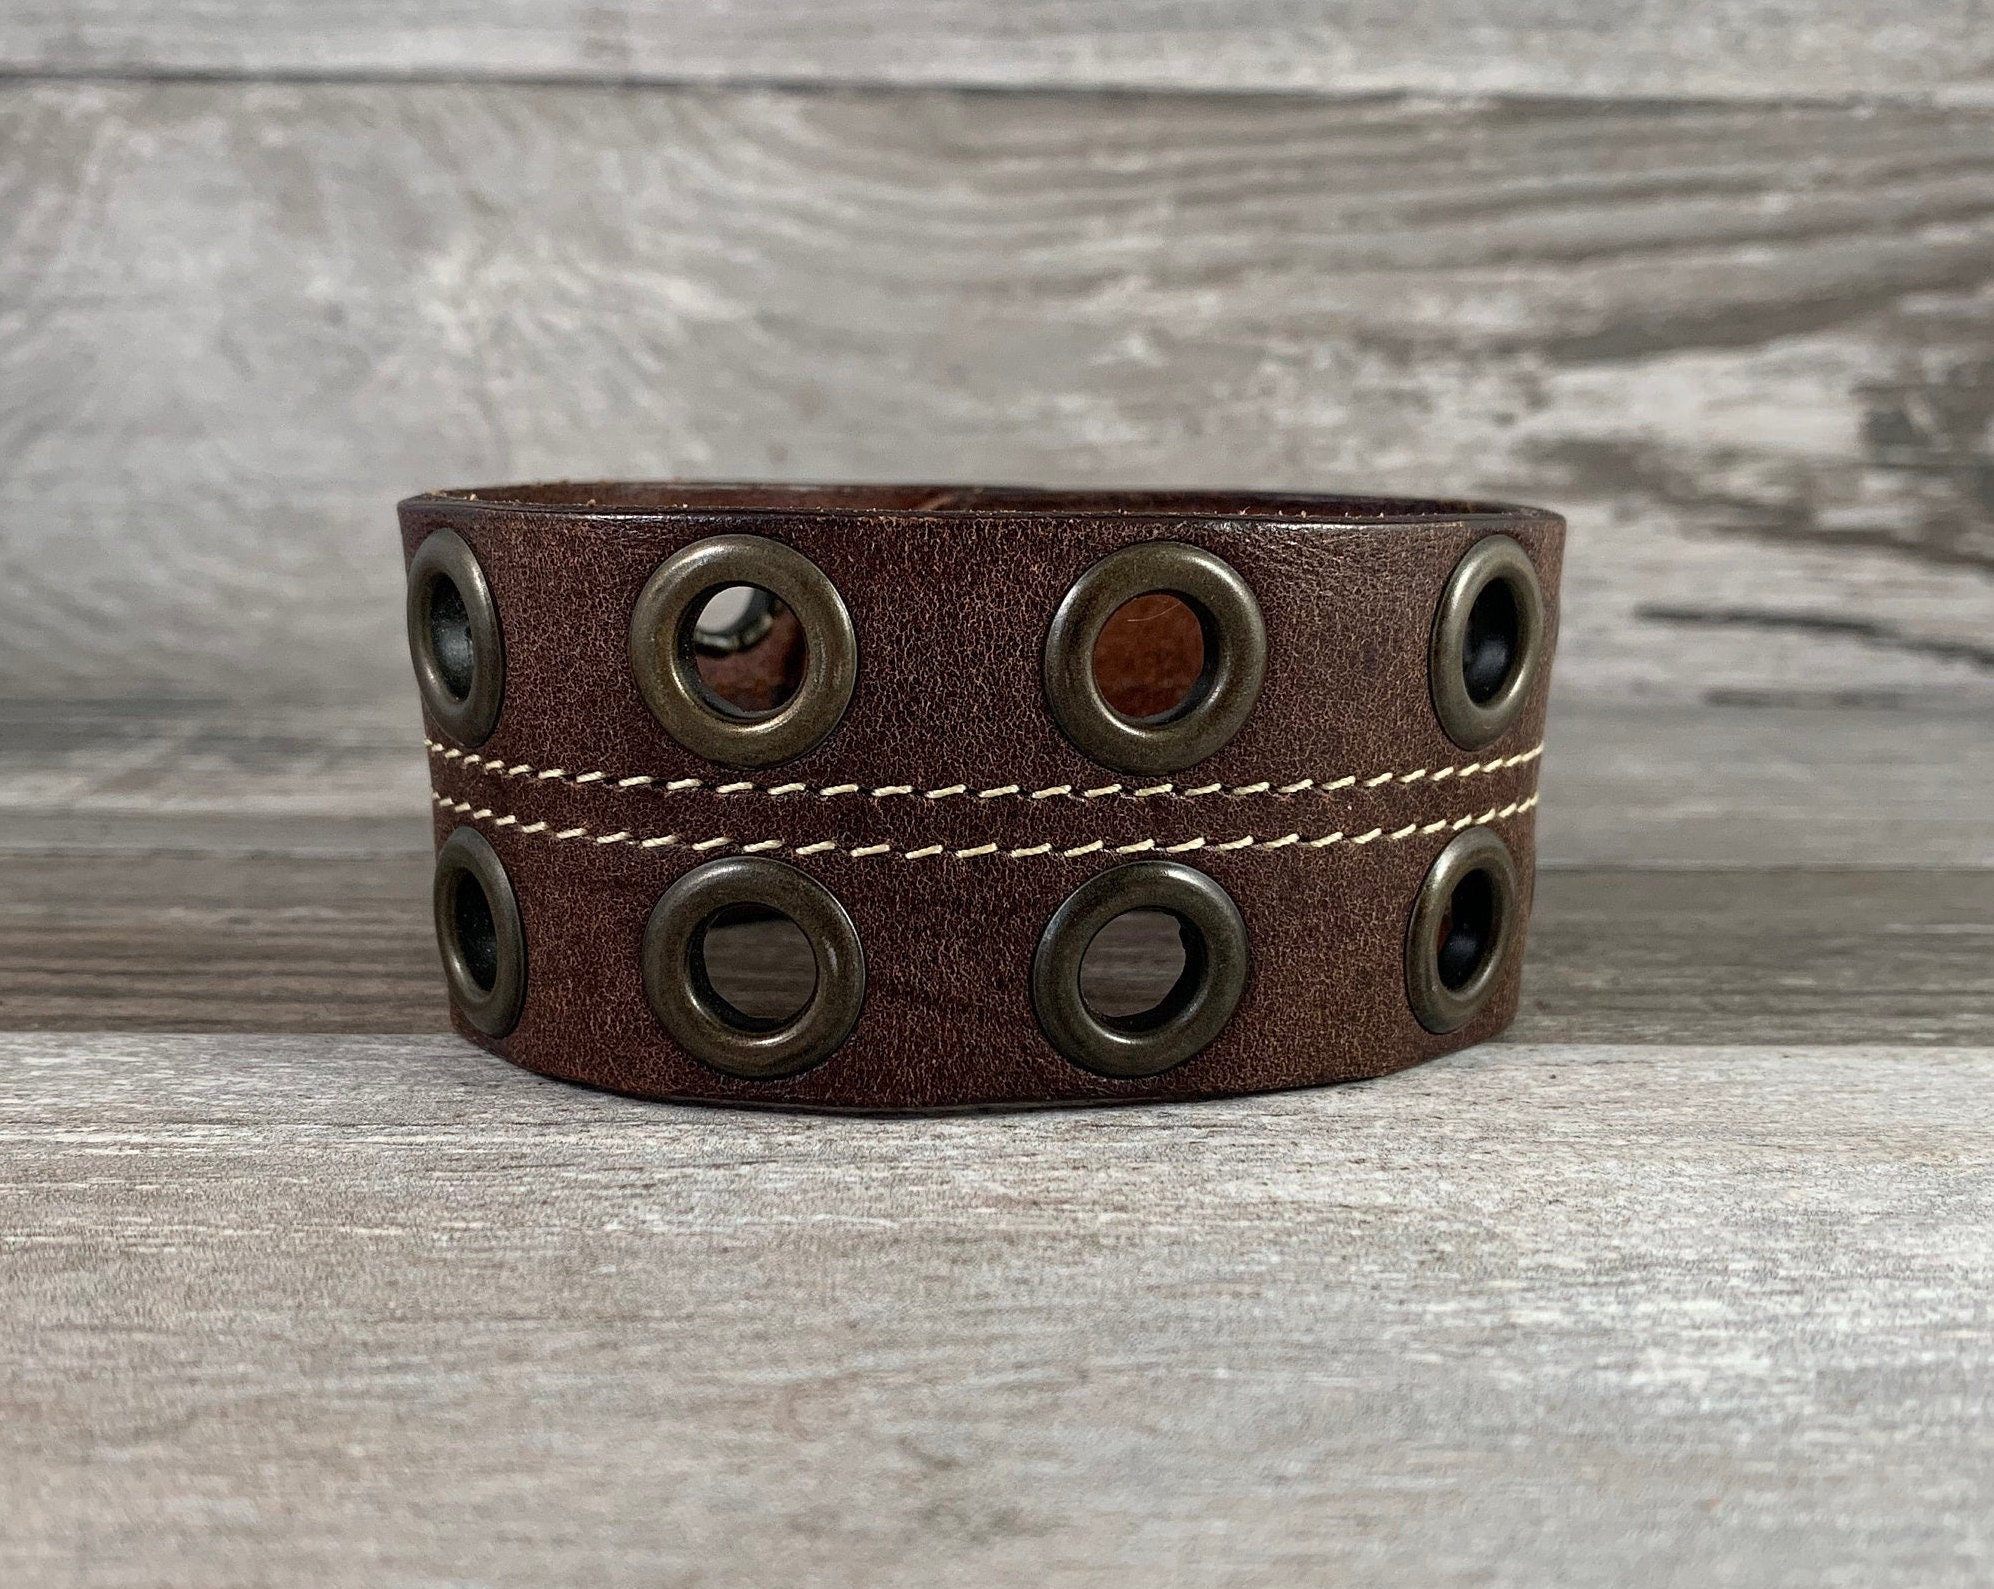 How to Make a Leather Cuff Bracelet - SavvyMom